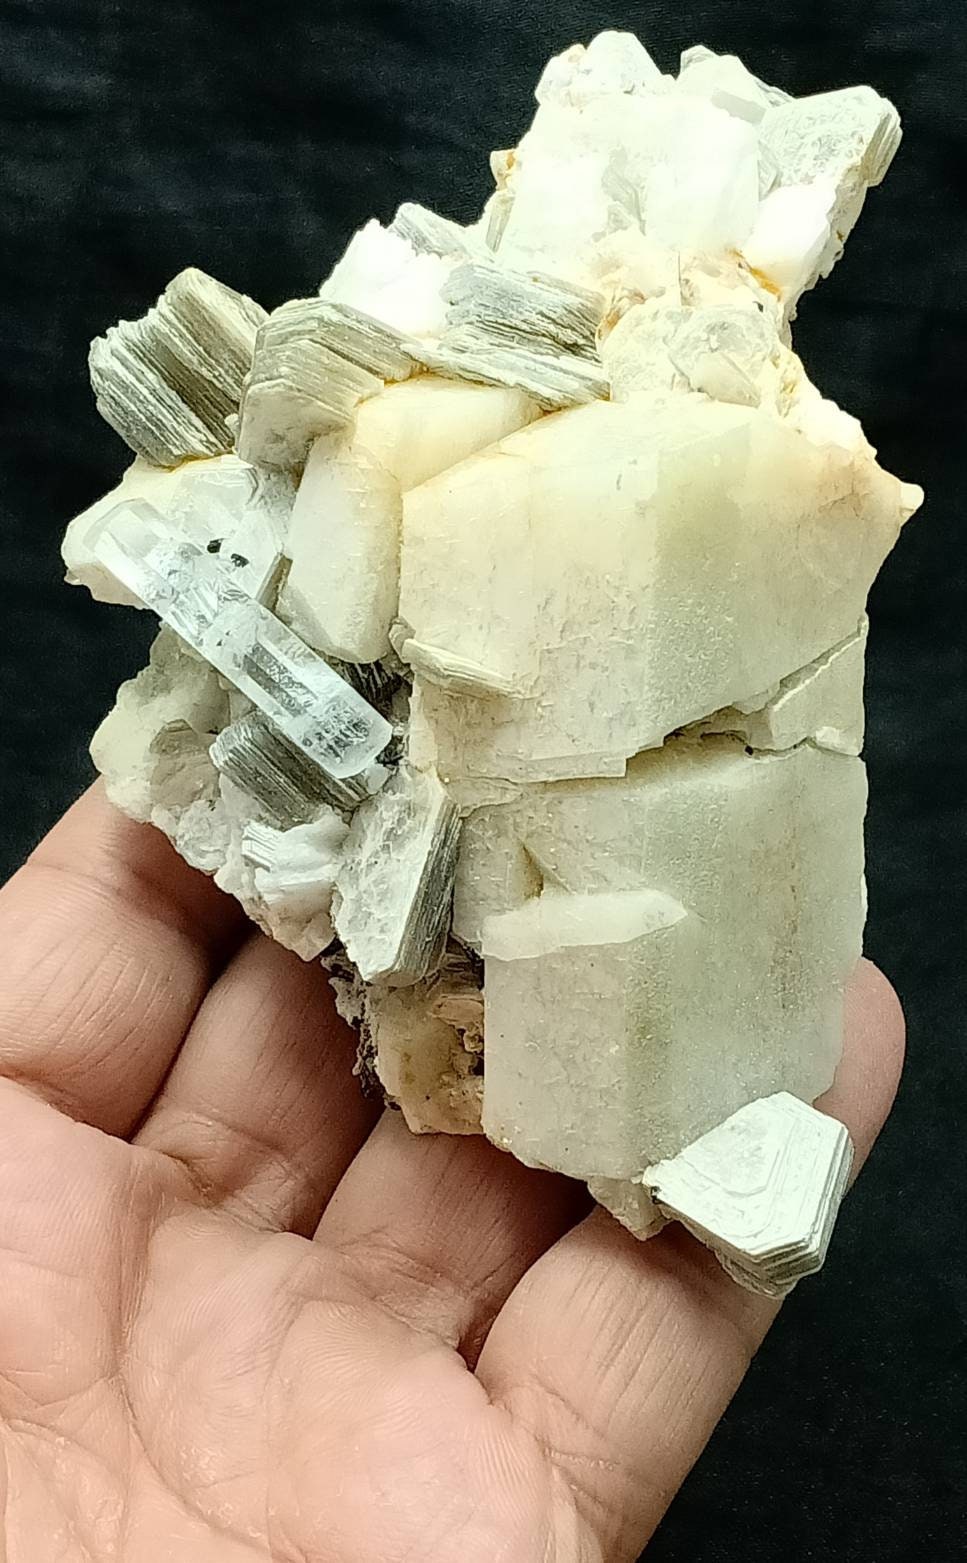 Aquamarine Crystal on matrix of Feldspar with Mica and schorl 452 grams